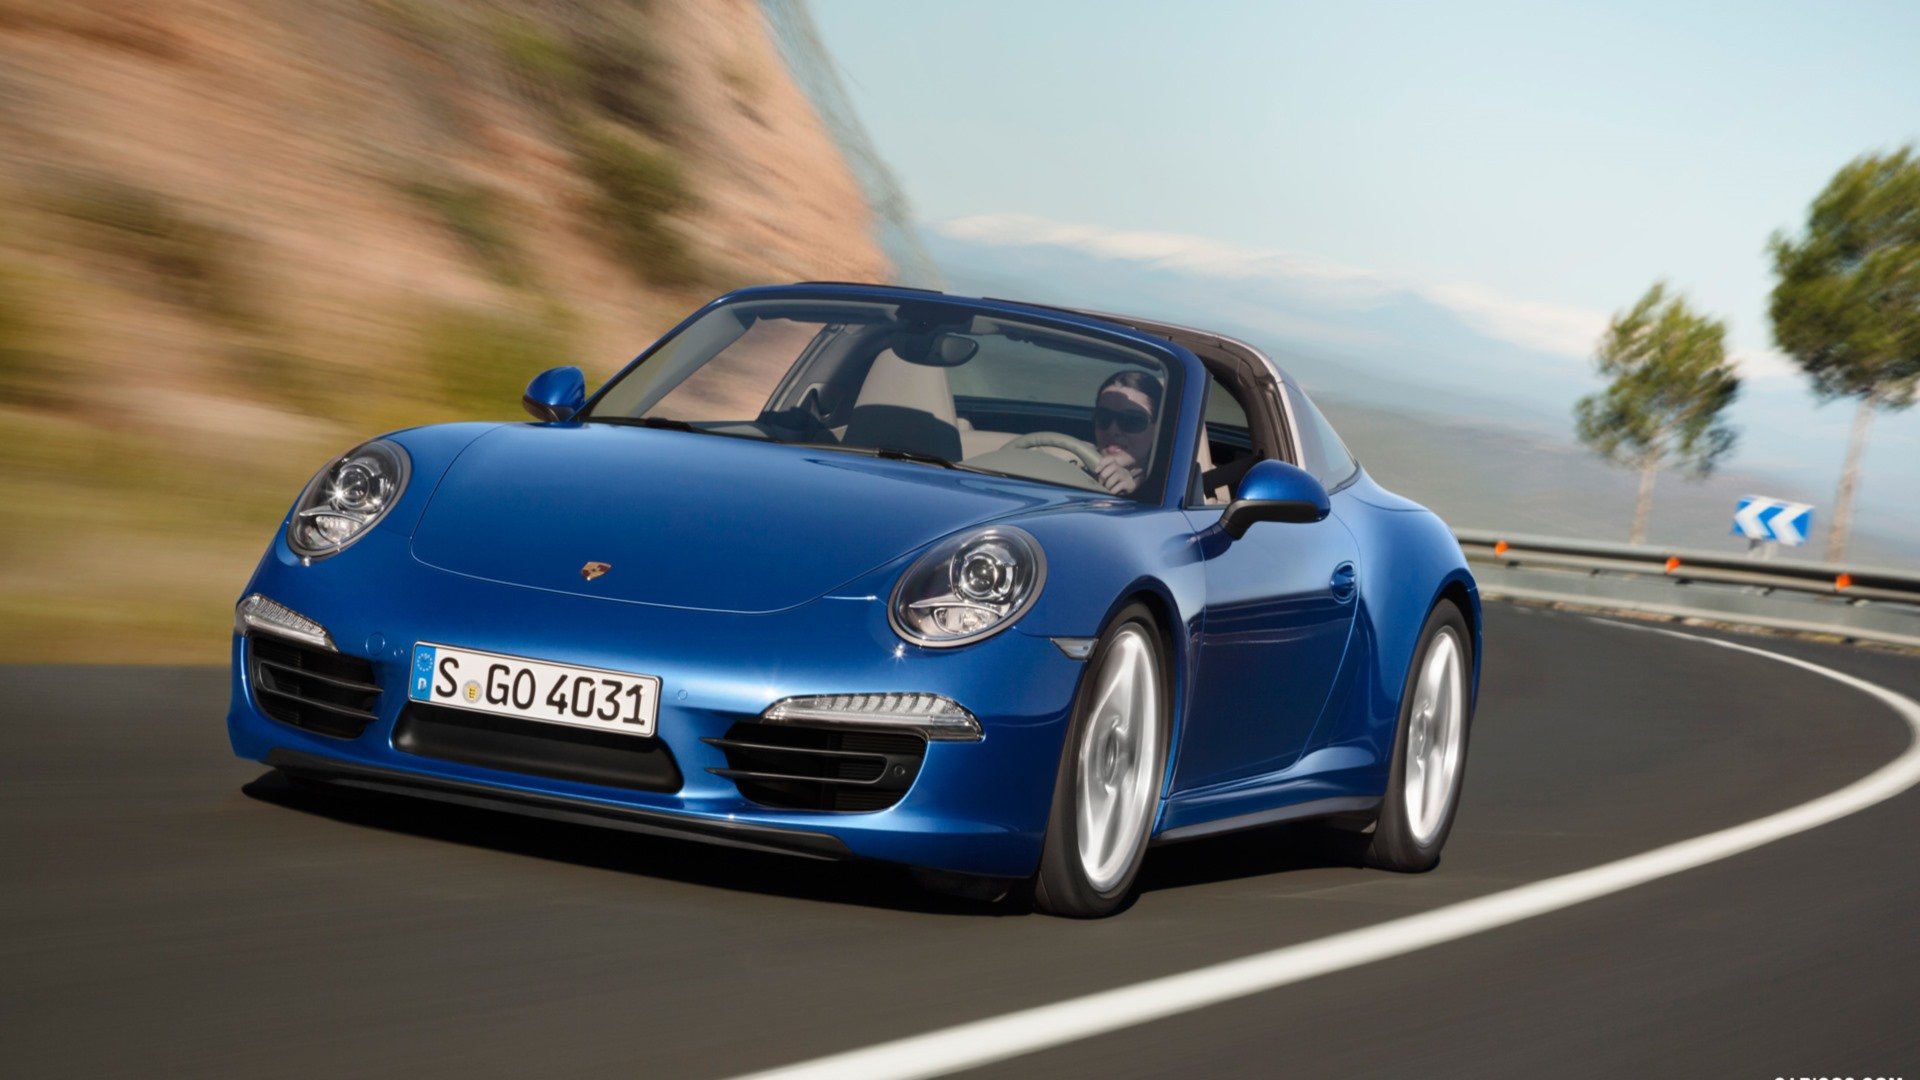 High resolution Porsche 911 Targa full hd 1920x1080 background ID:383513 for desktop